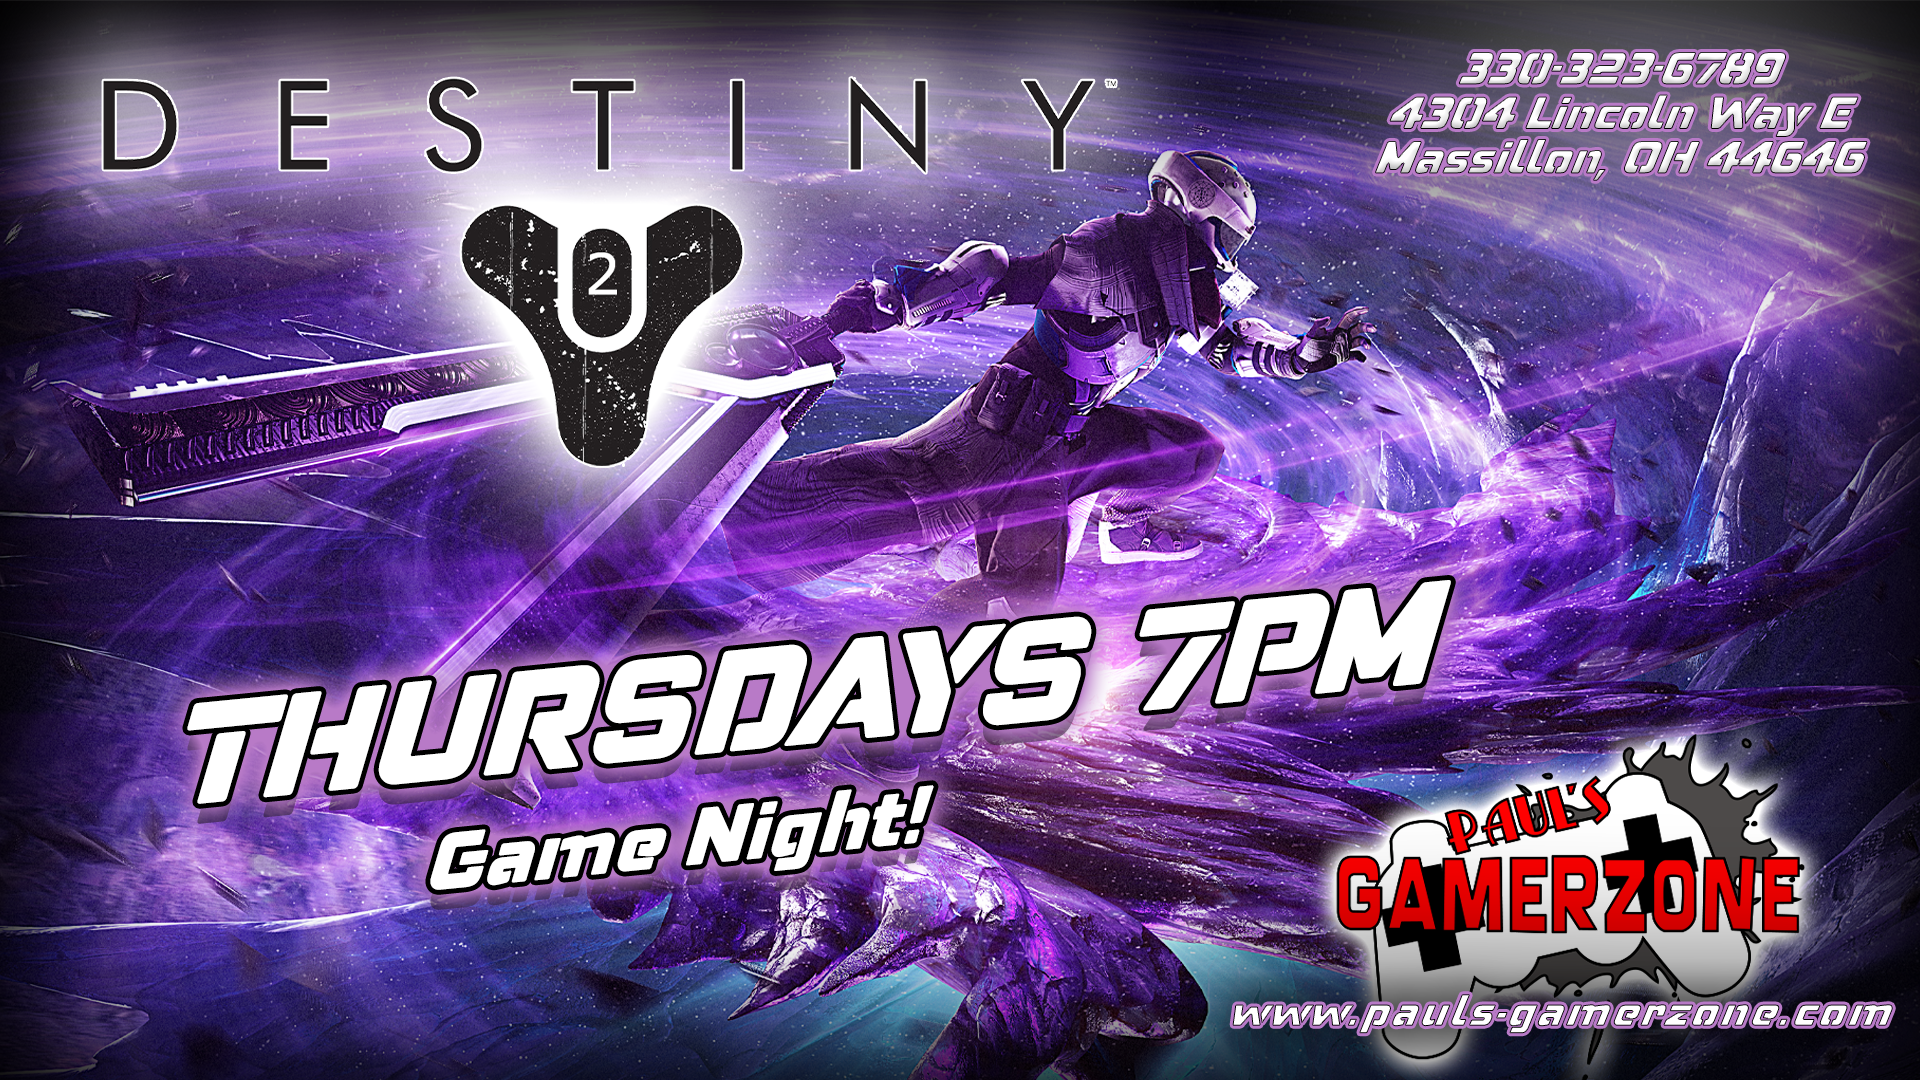 Destiny 2 Game Night!